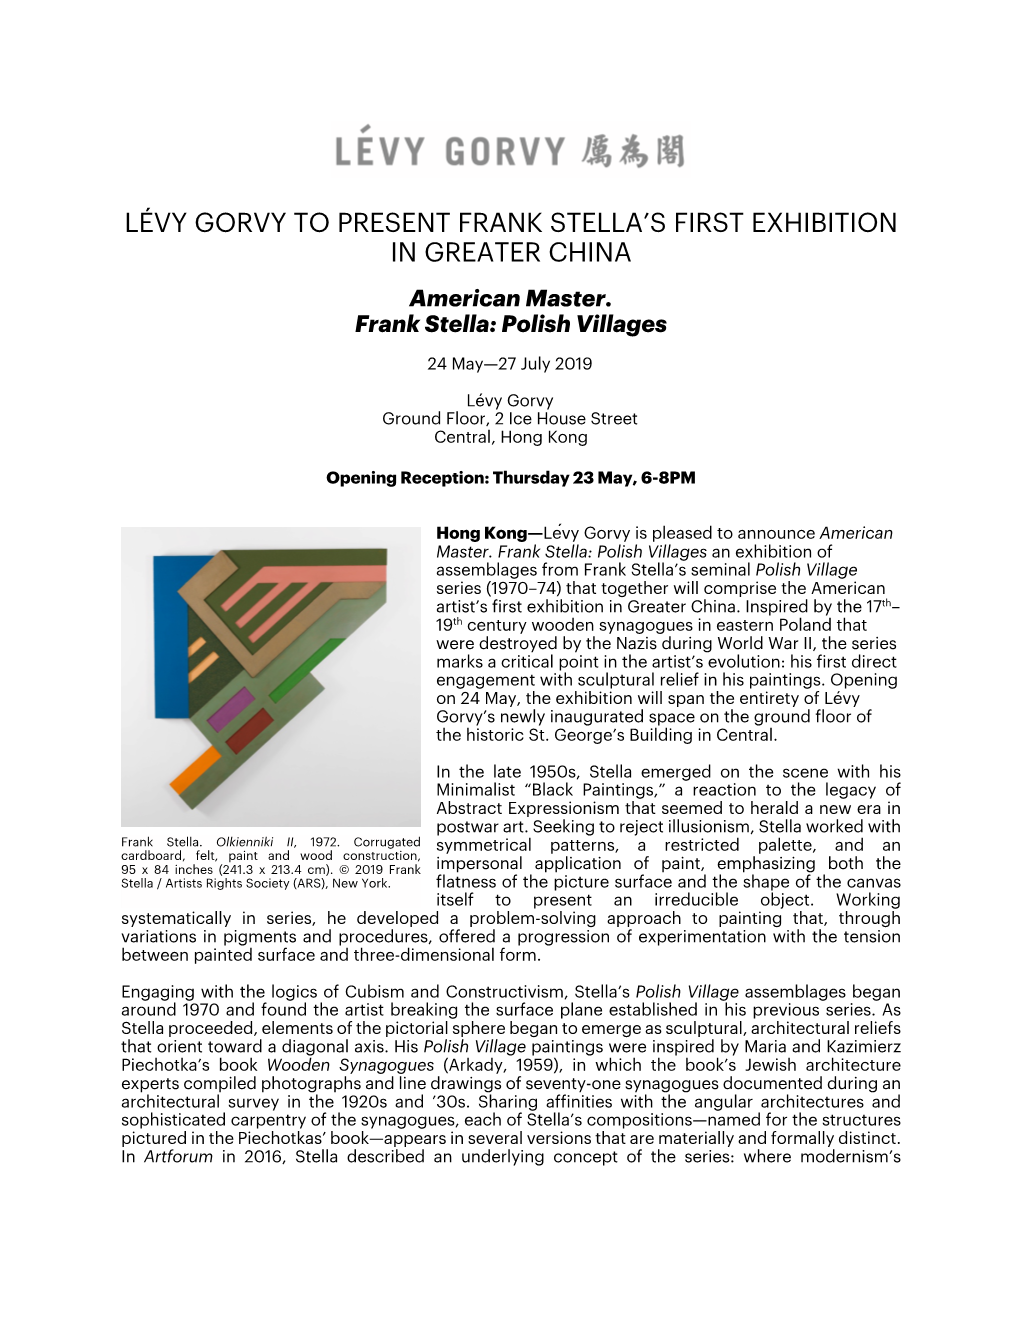 Lévy Gorvy to Present Frank Stella's First Exhibition In